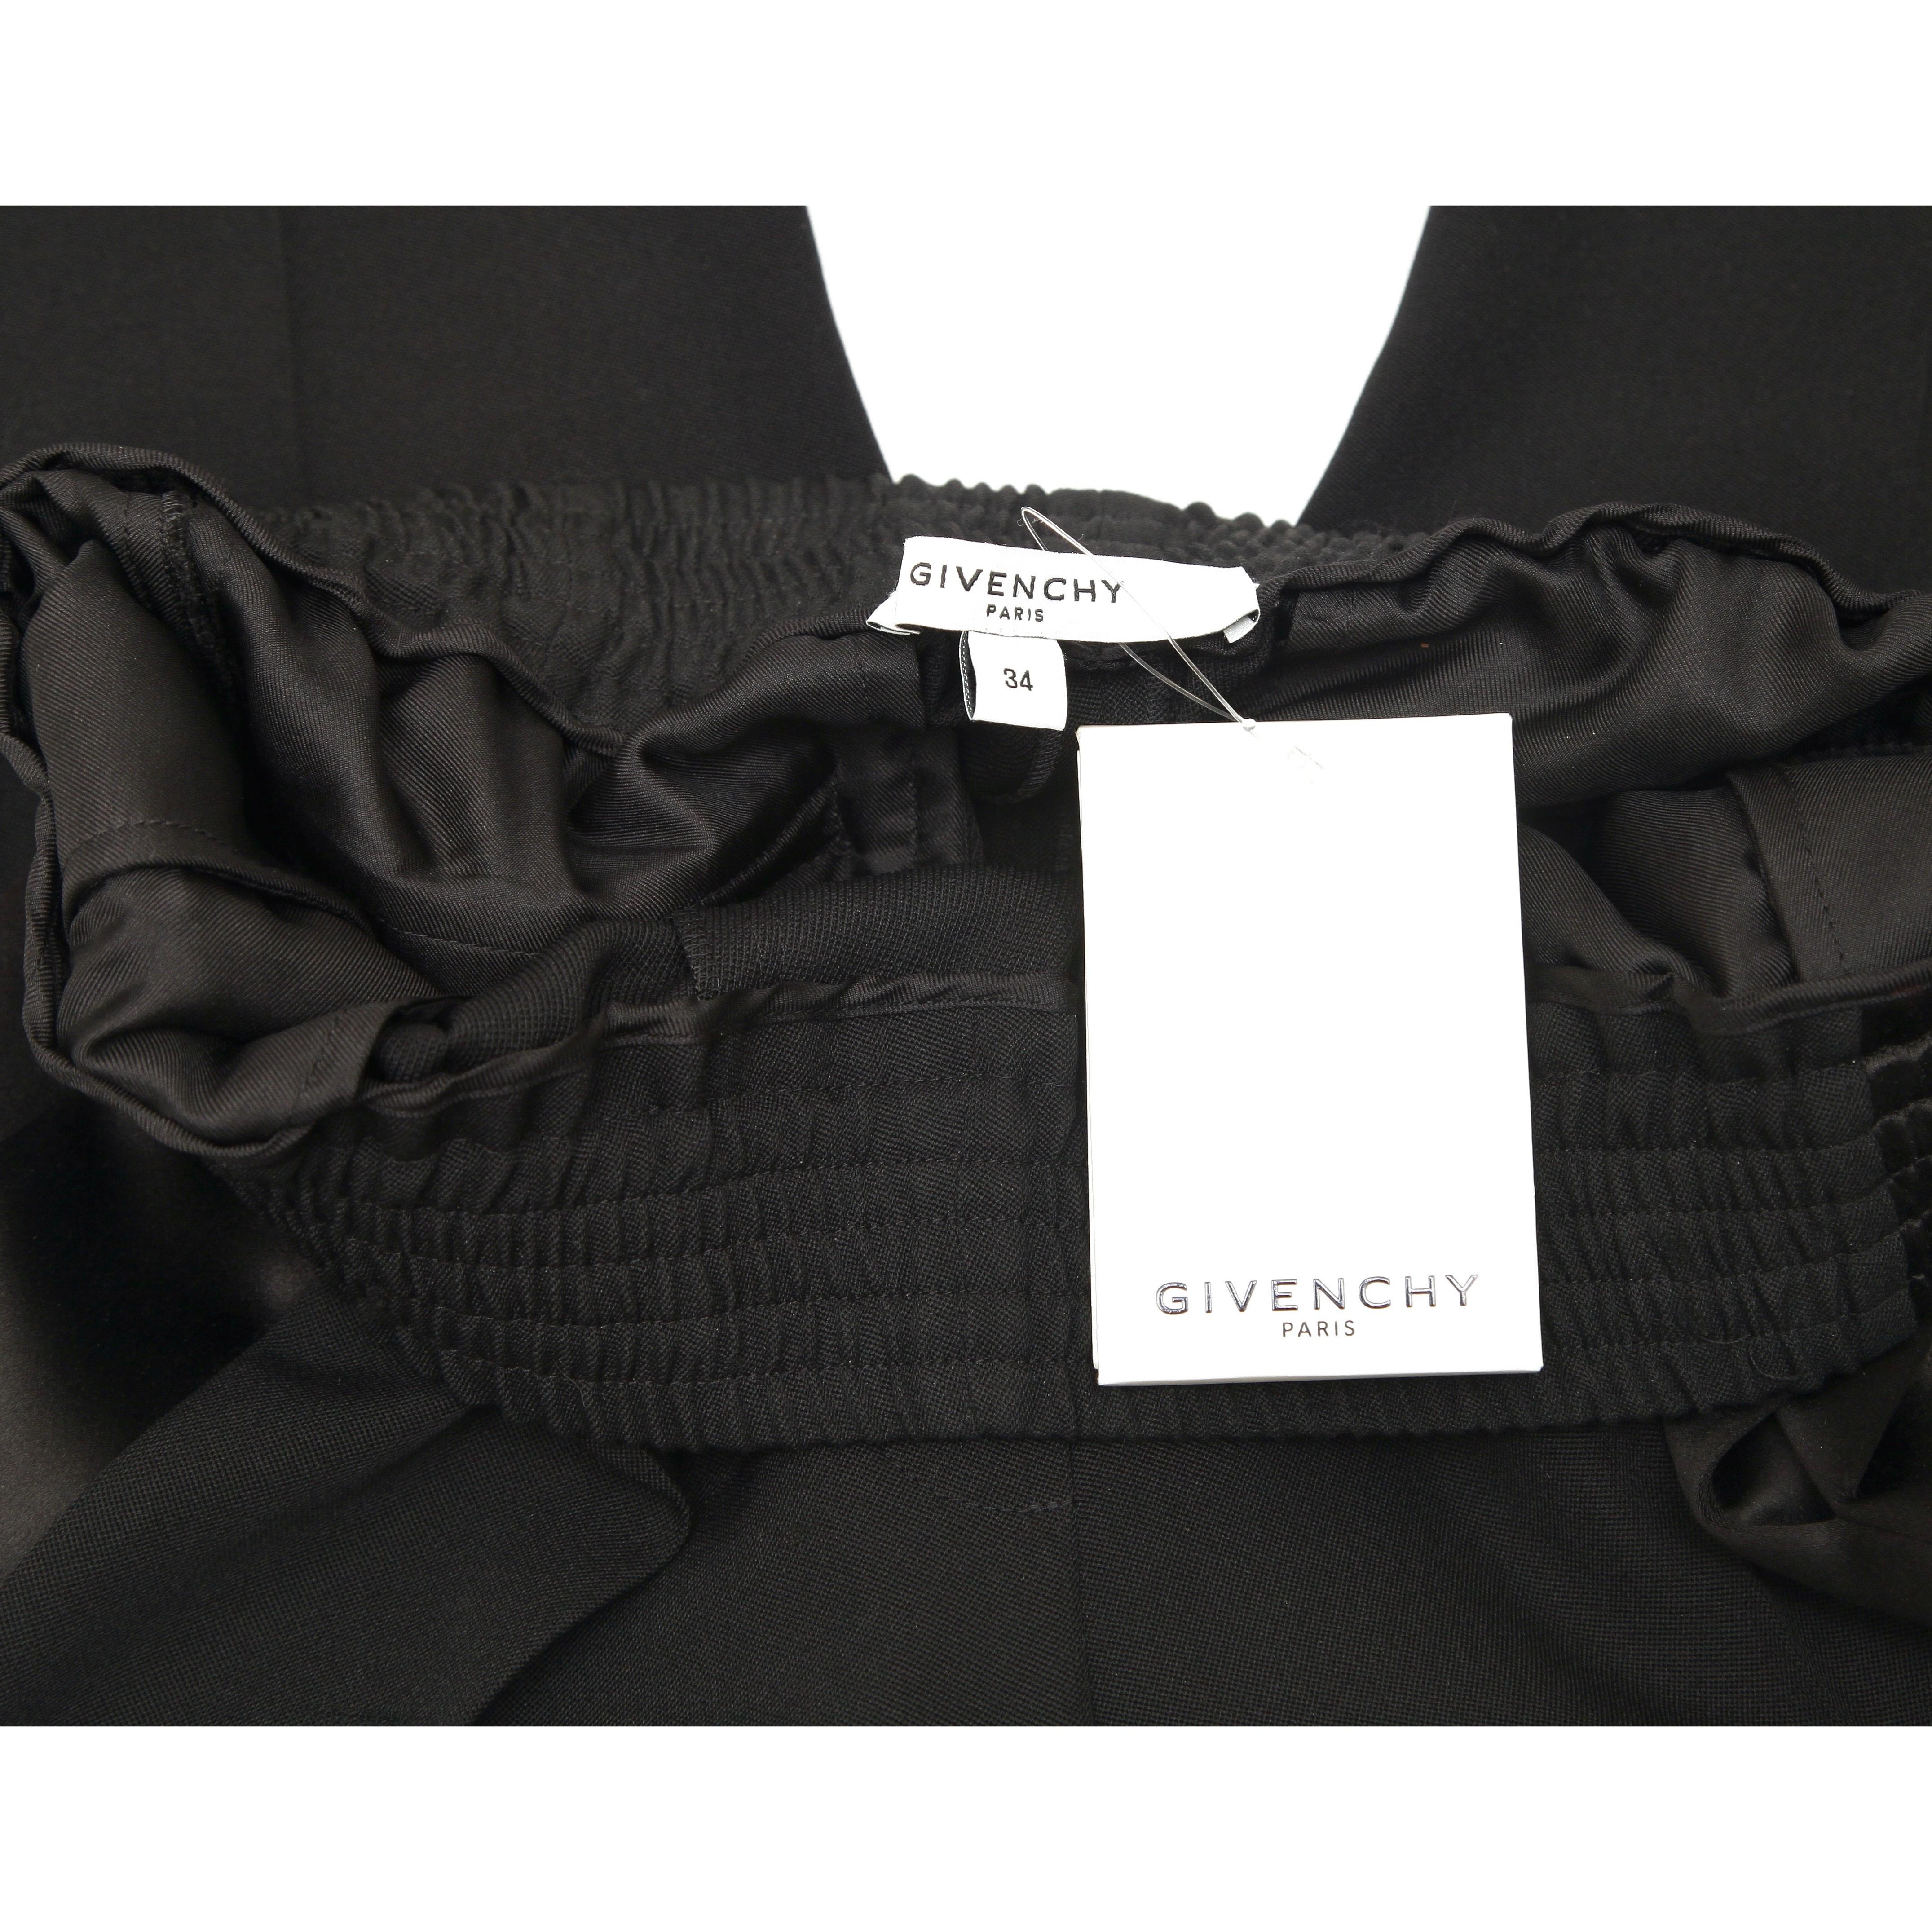 GIVENCHY Pants Black Wool Side Panels Slip On Elastic Pockets Sz 34 NWT 1